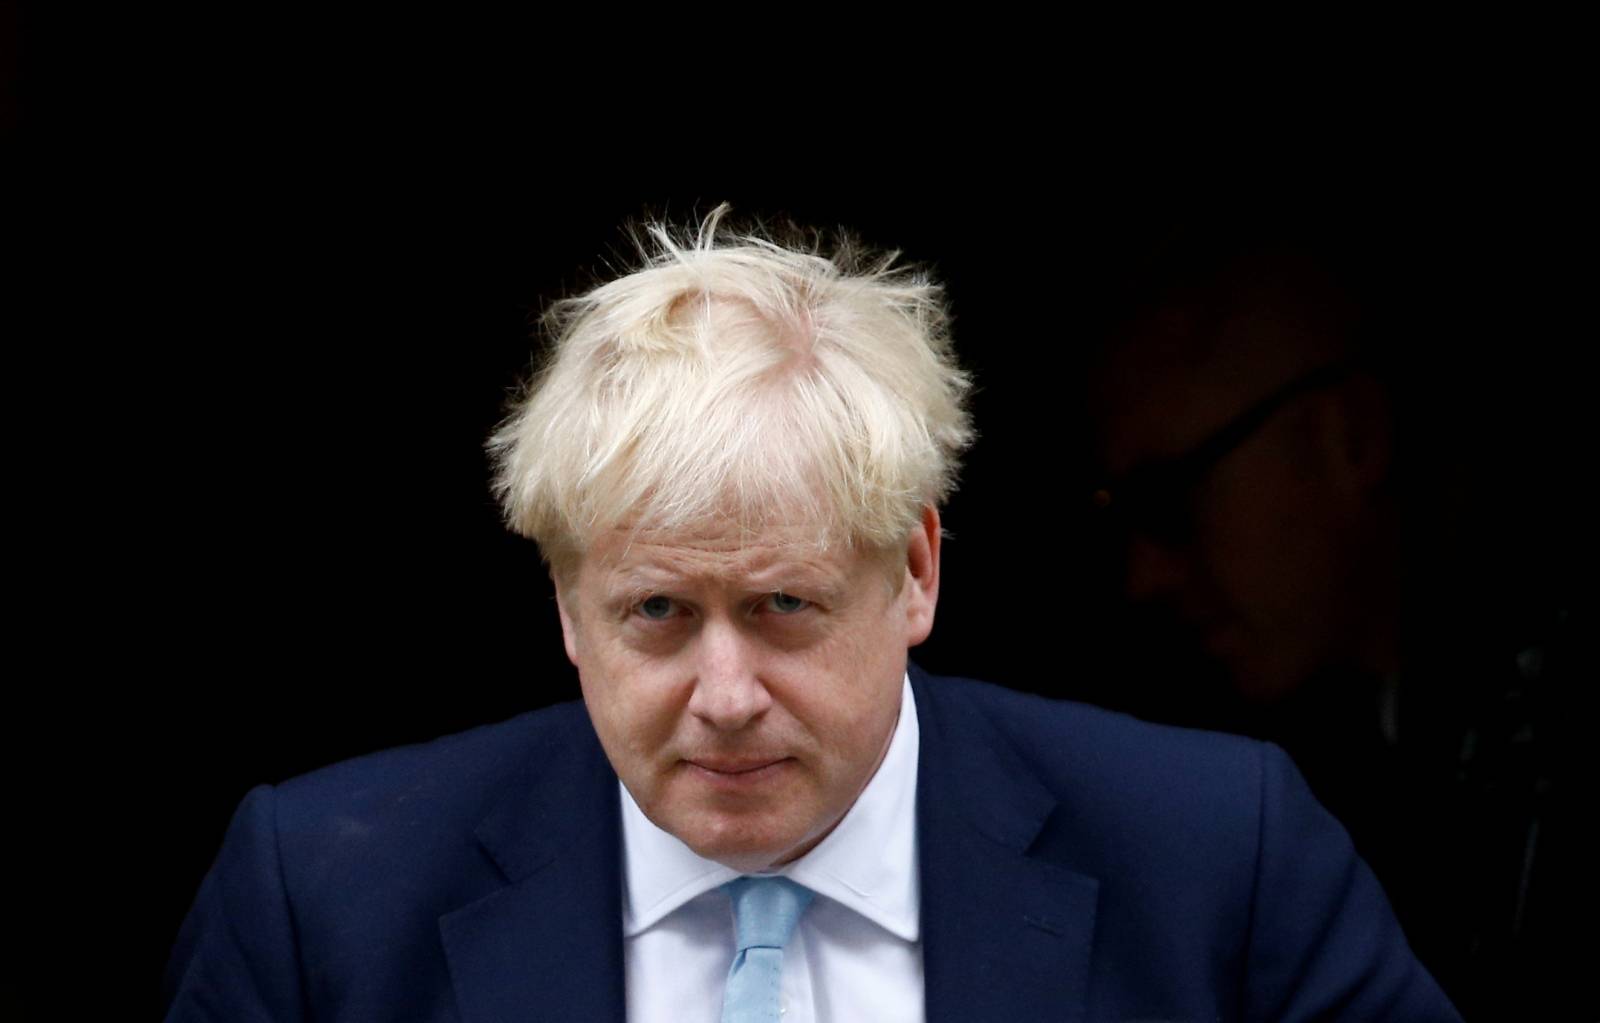 FILE PHOTO: British Prime Minister Boris Johnson leaves Downing Street in London